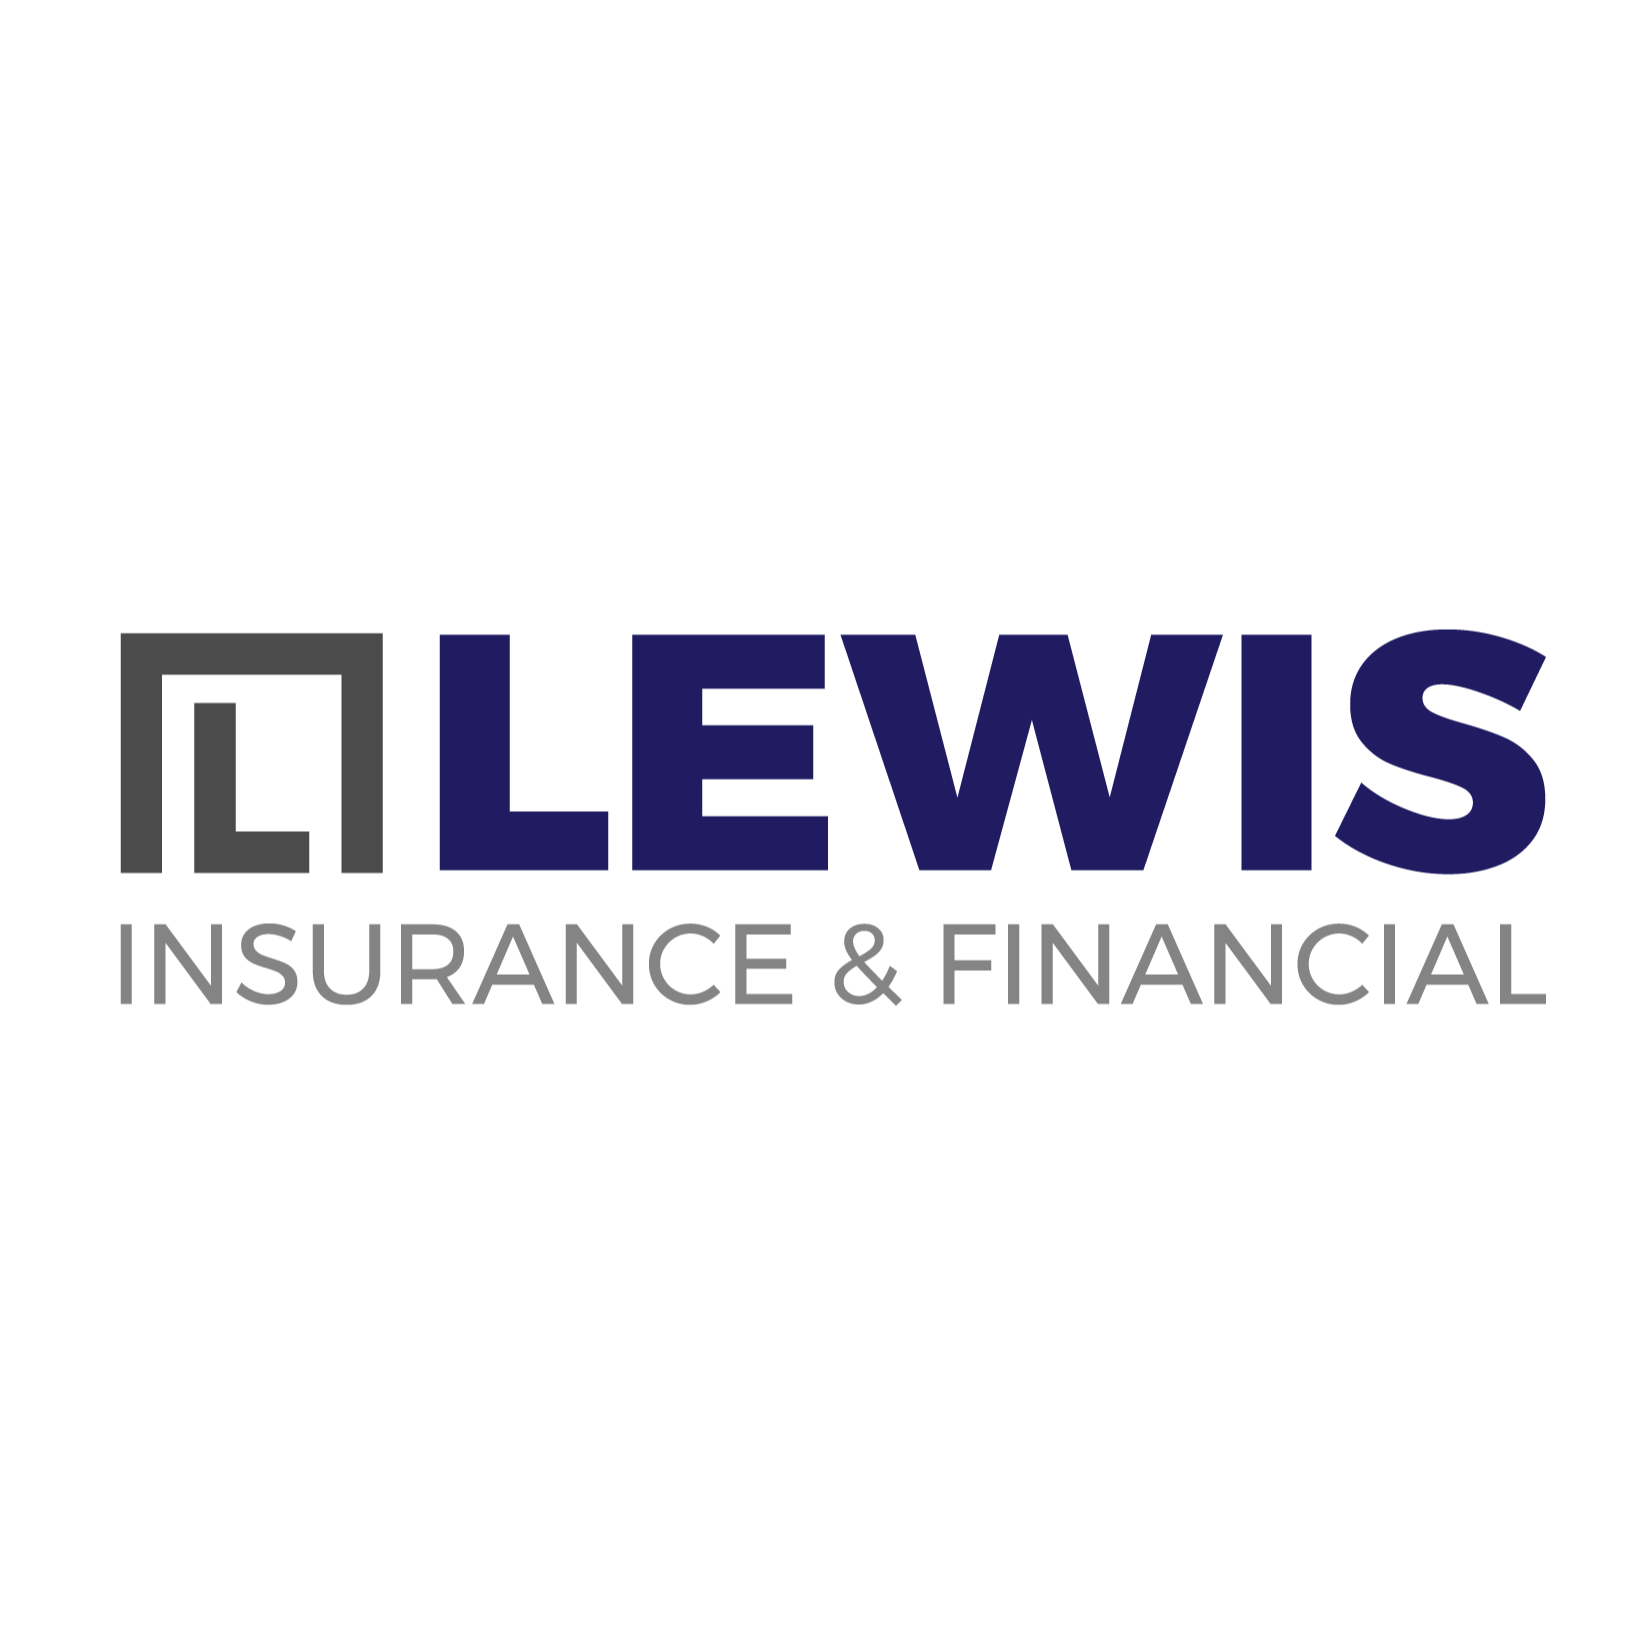 Steve Lewis, Insurance Agent